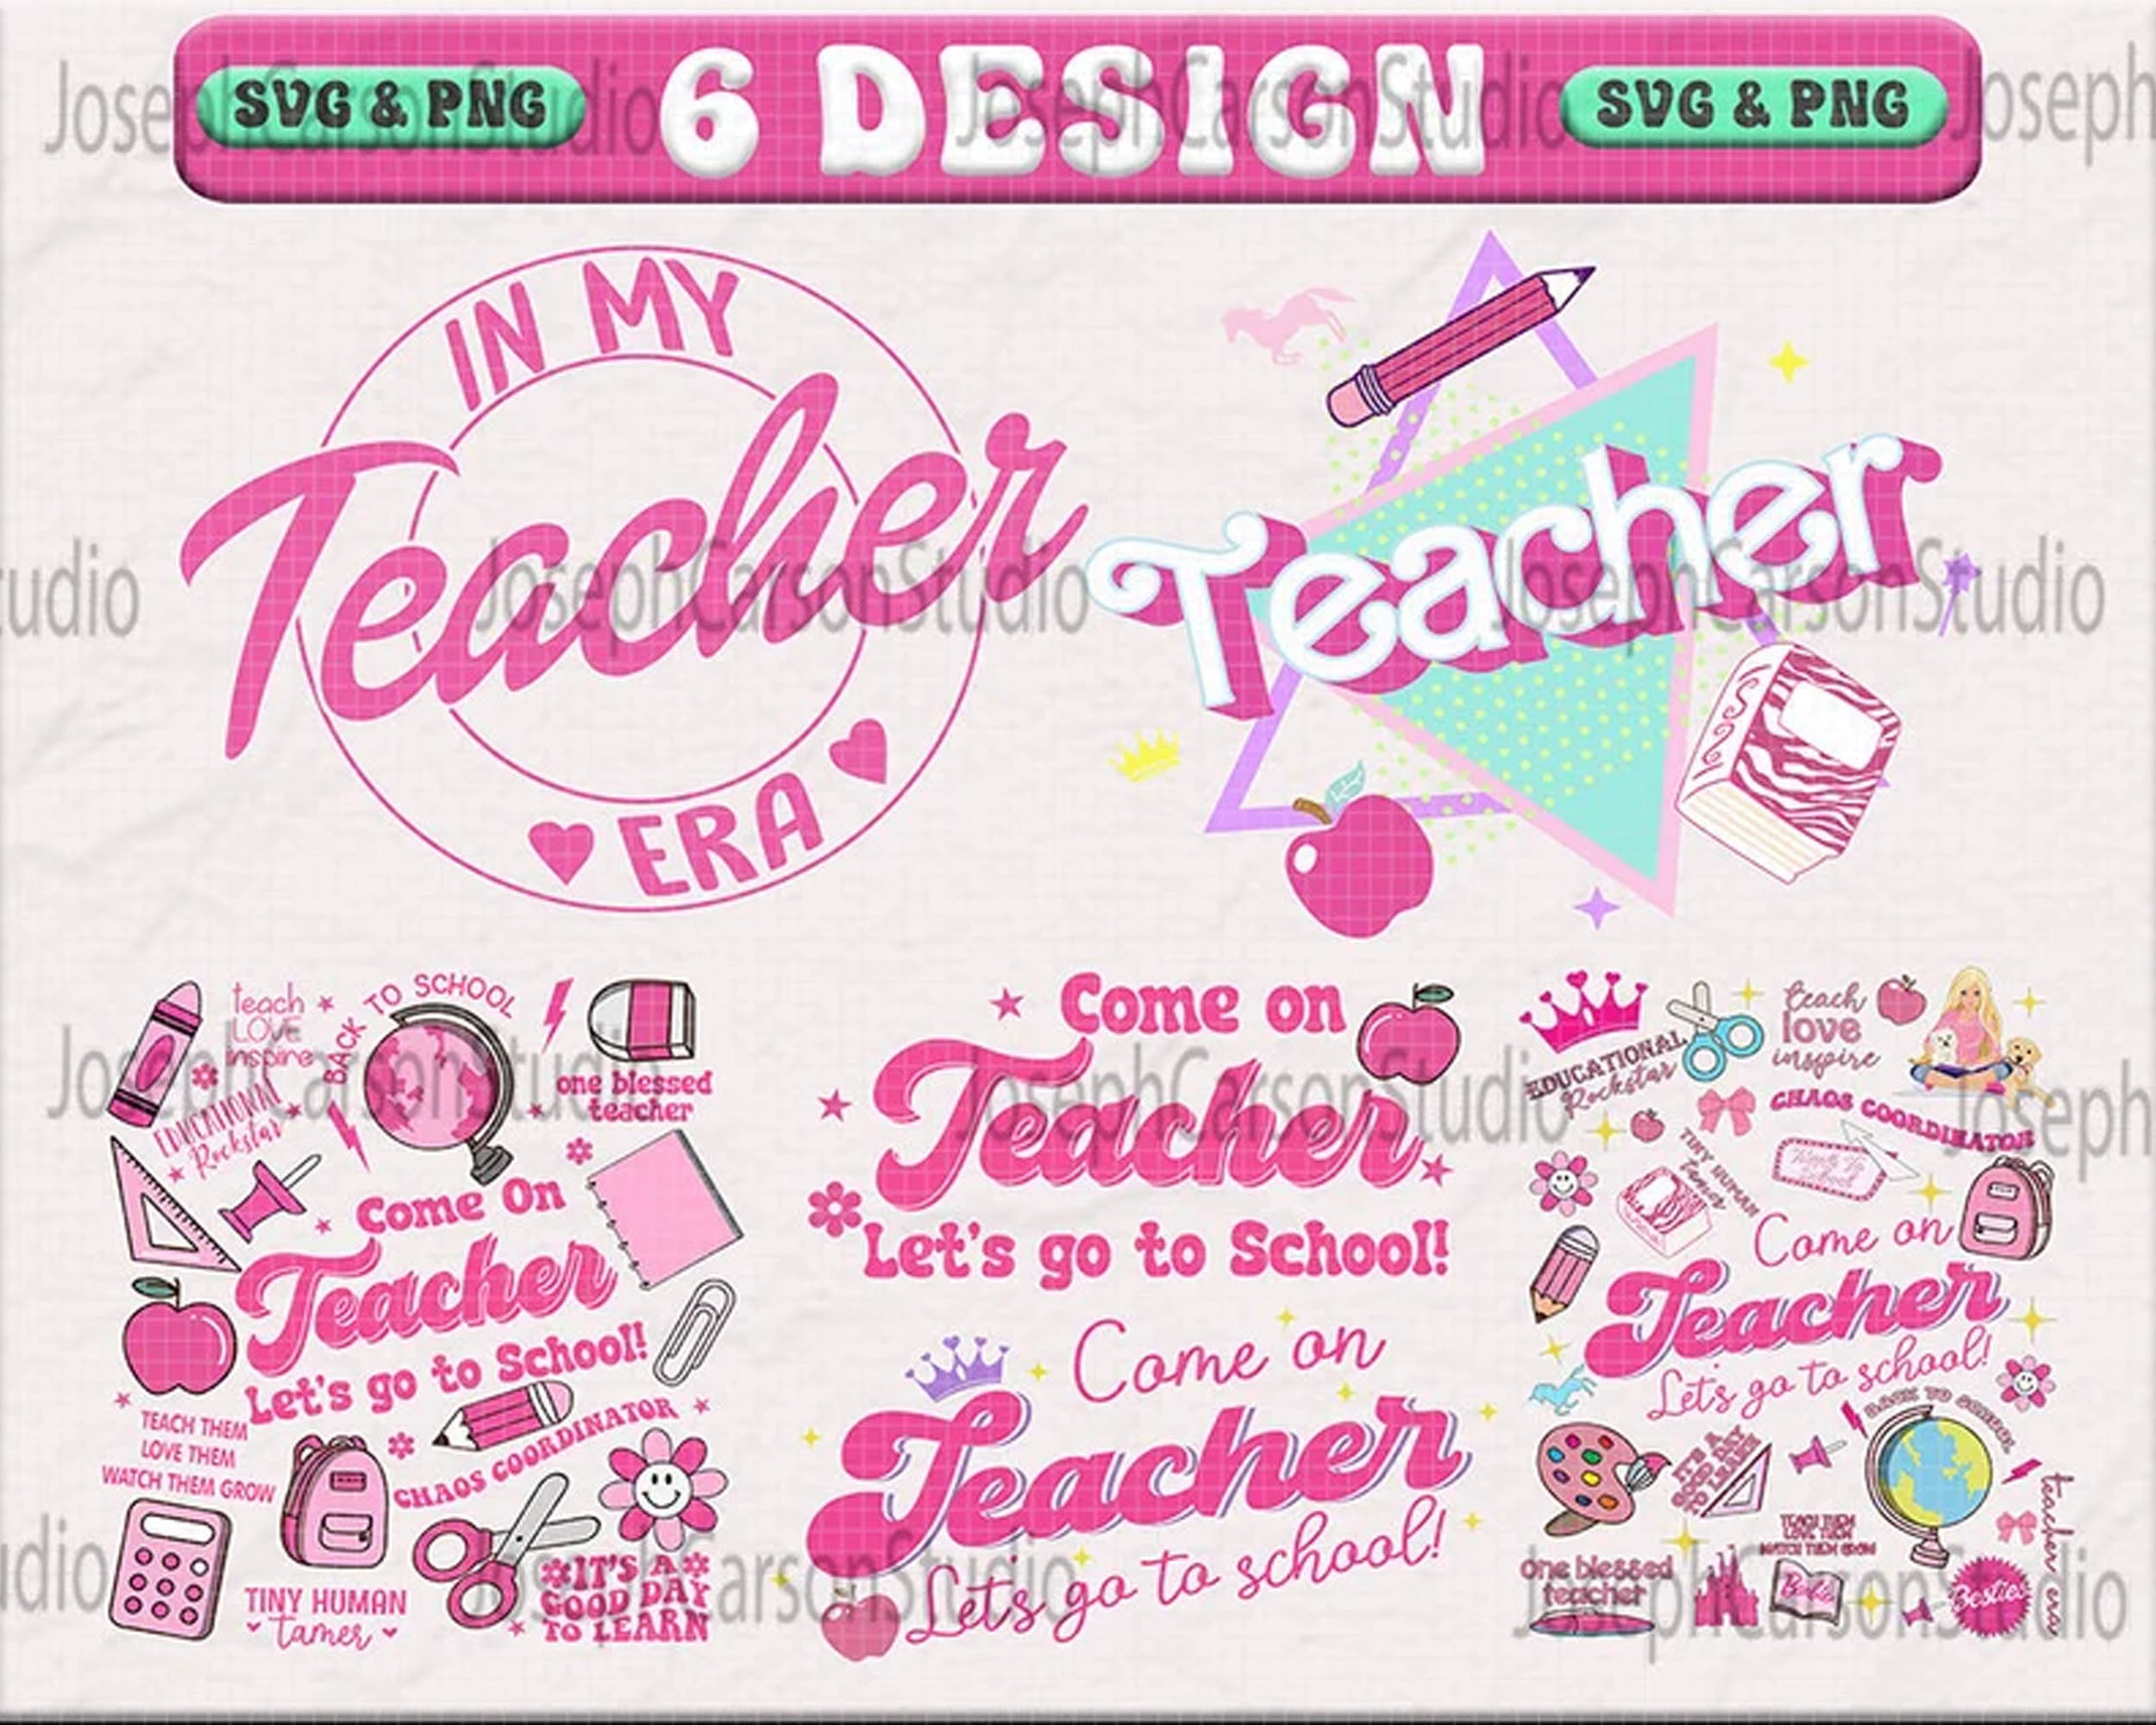 Barbie Teacher Png, In My Teacher Era Png, Barbie Teacher Era, Back To School Png, First Day Of School Png, Barbie School, Come On Barbie